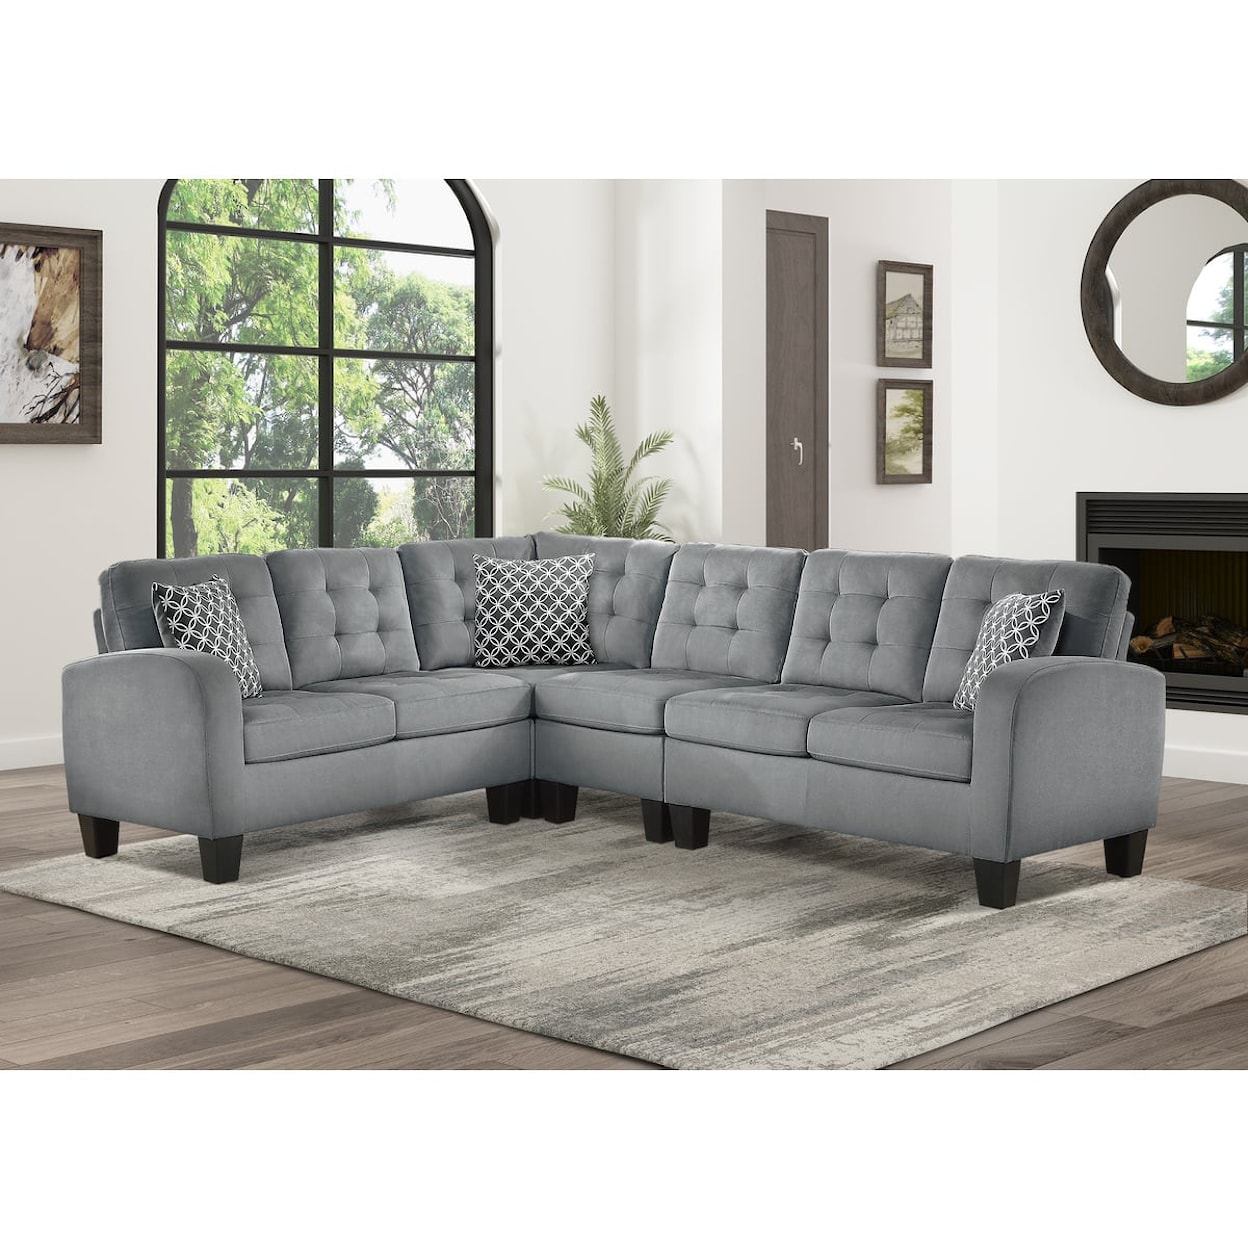 Homelegance Furniture Sinclair 2-Piece Reversible Sectional Sofa